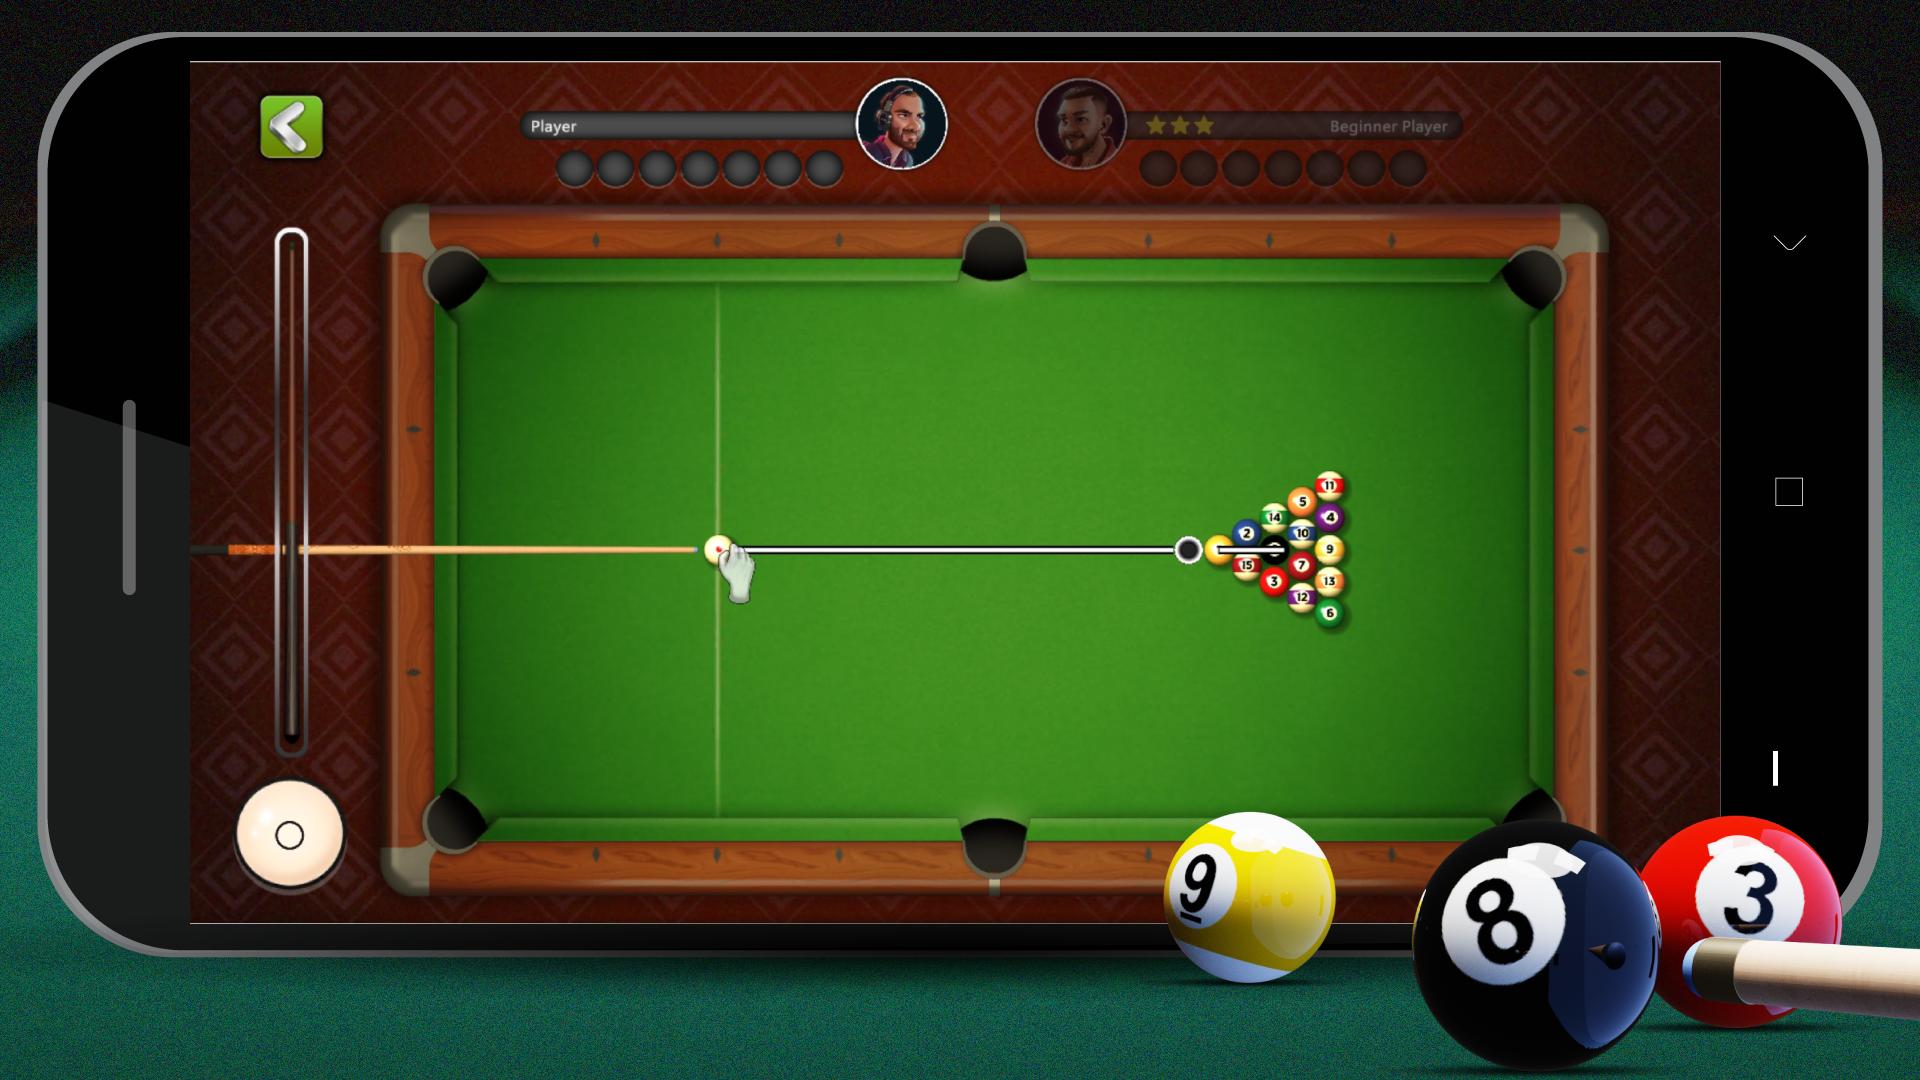 8 Ball Billiards- Offline Free Pool Game 1.51 Screenshot 12